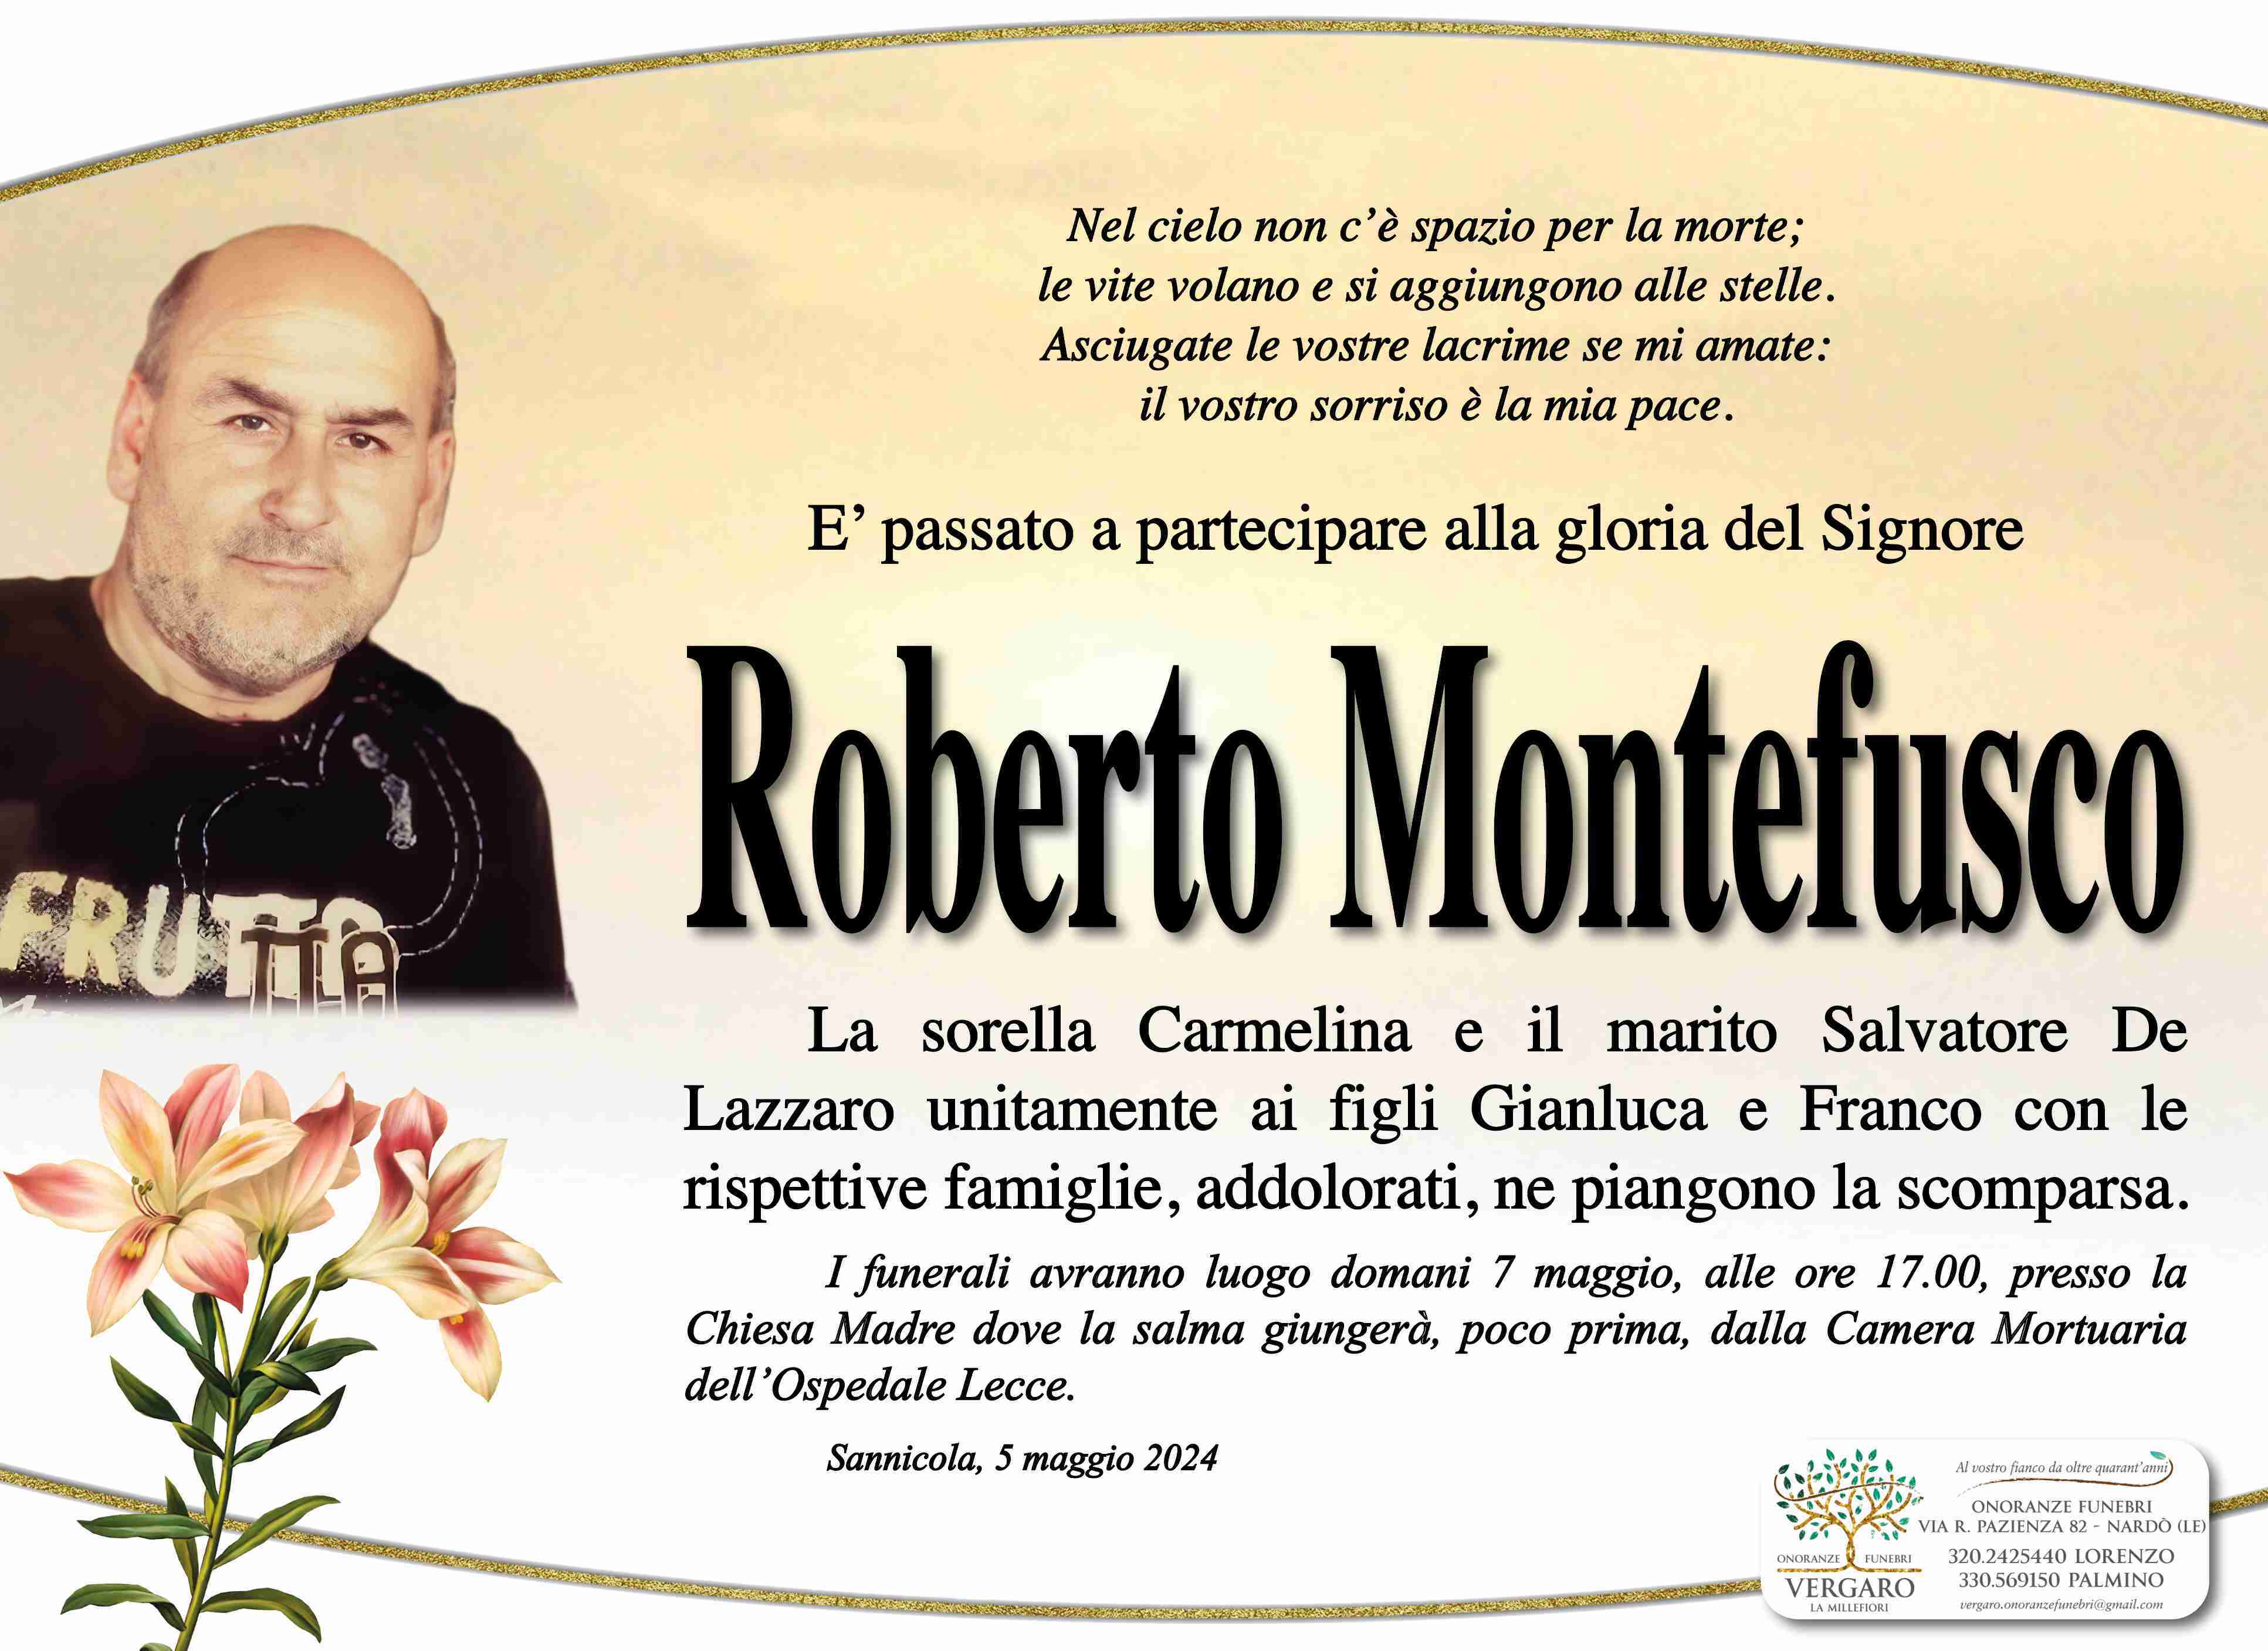 Roberto Montefusco